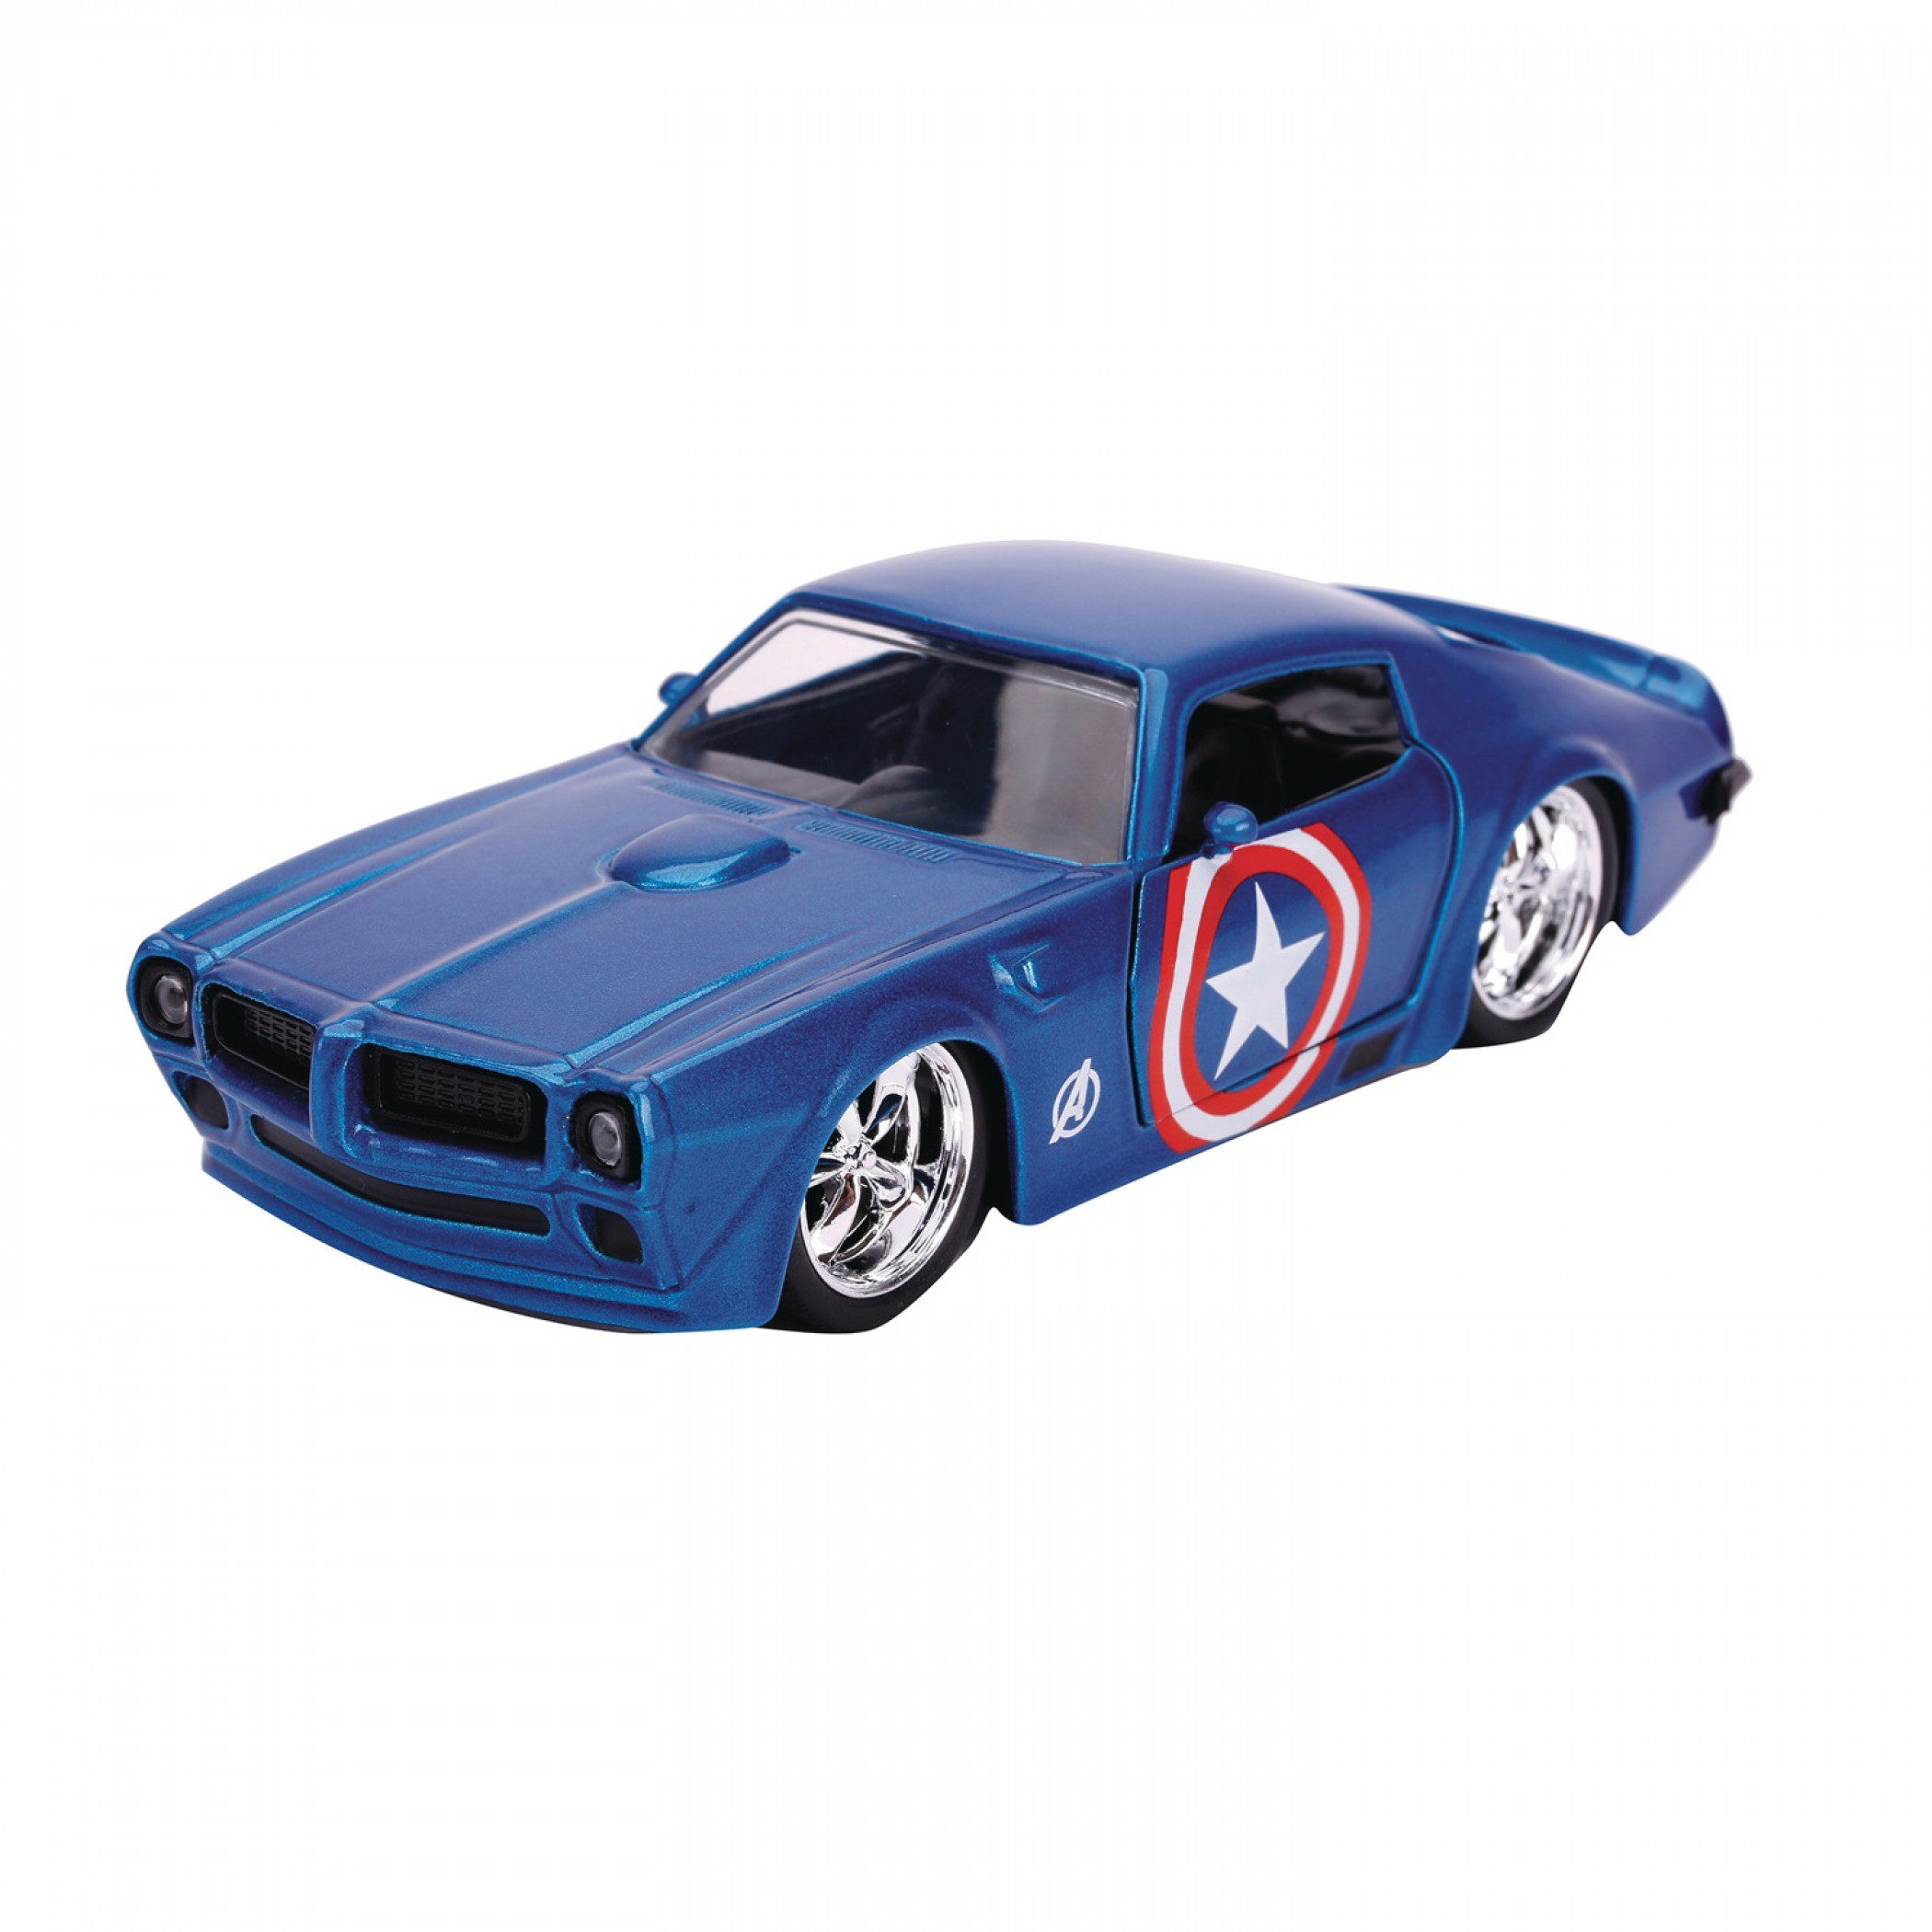 Captain America 1972 Pontiac Firebird Diecast Metal 5" Movie Car by Jada Toys